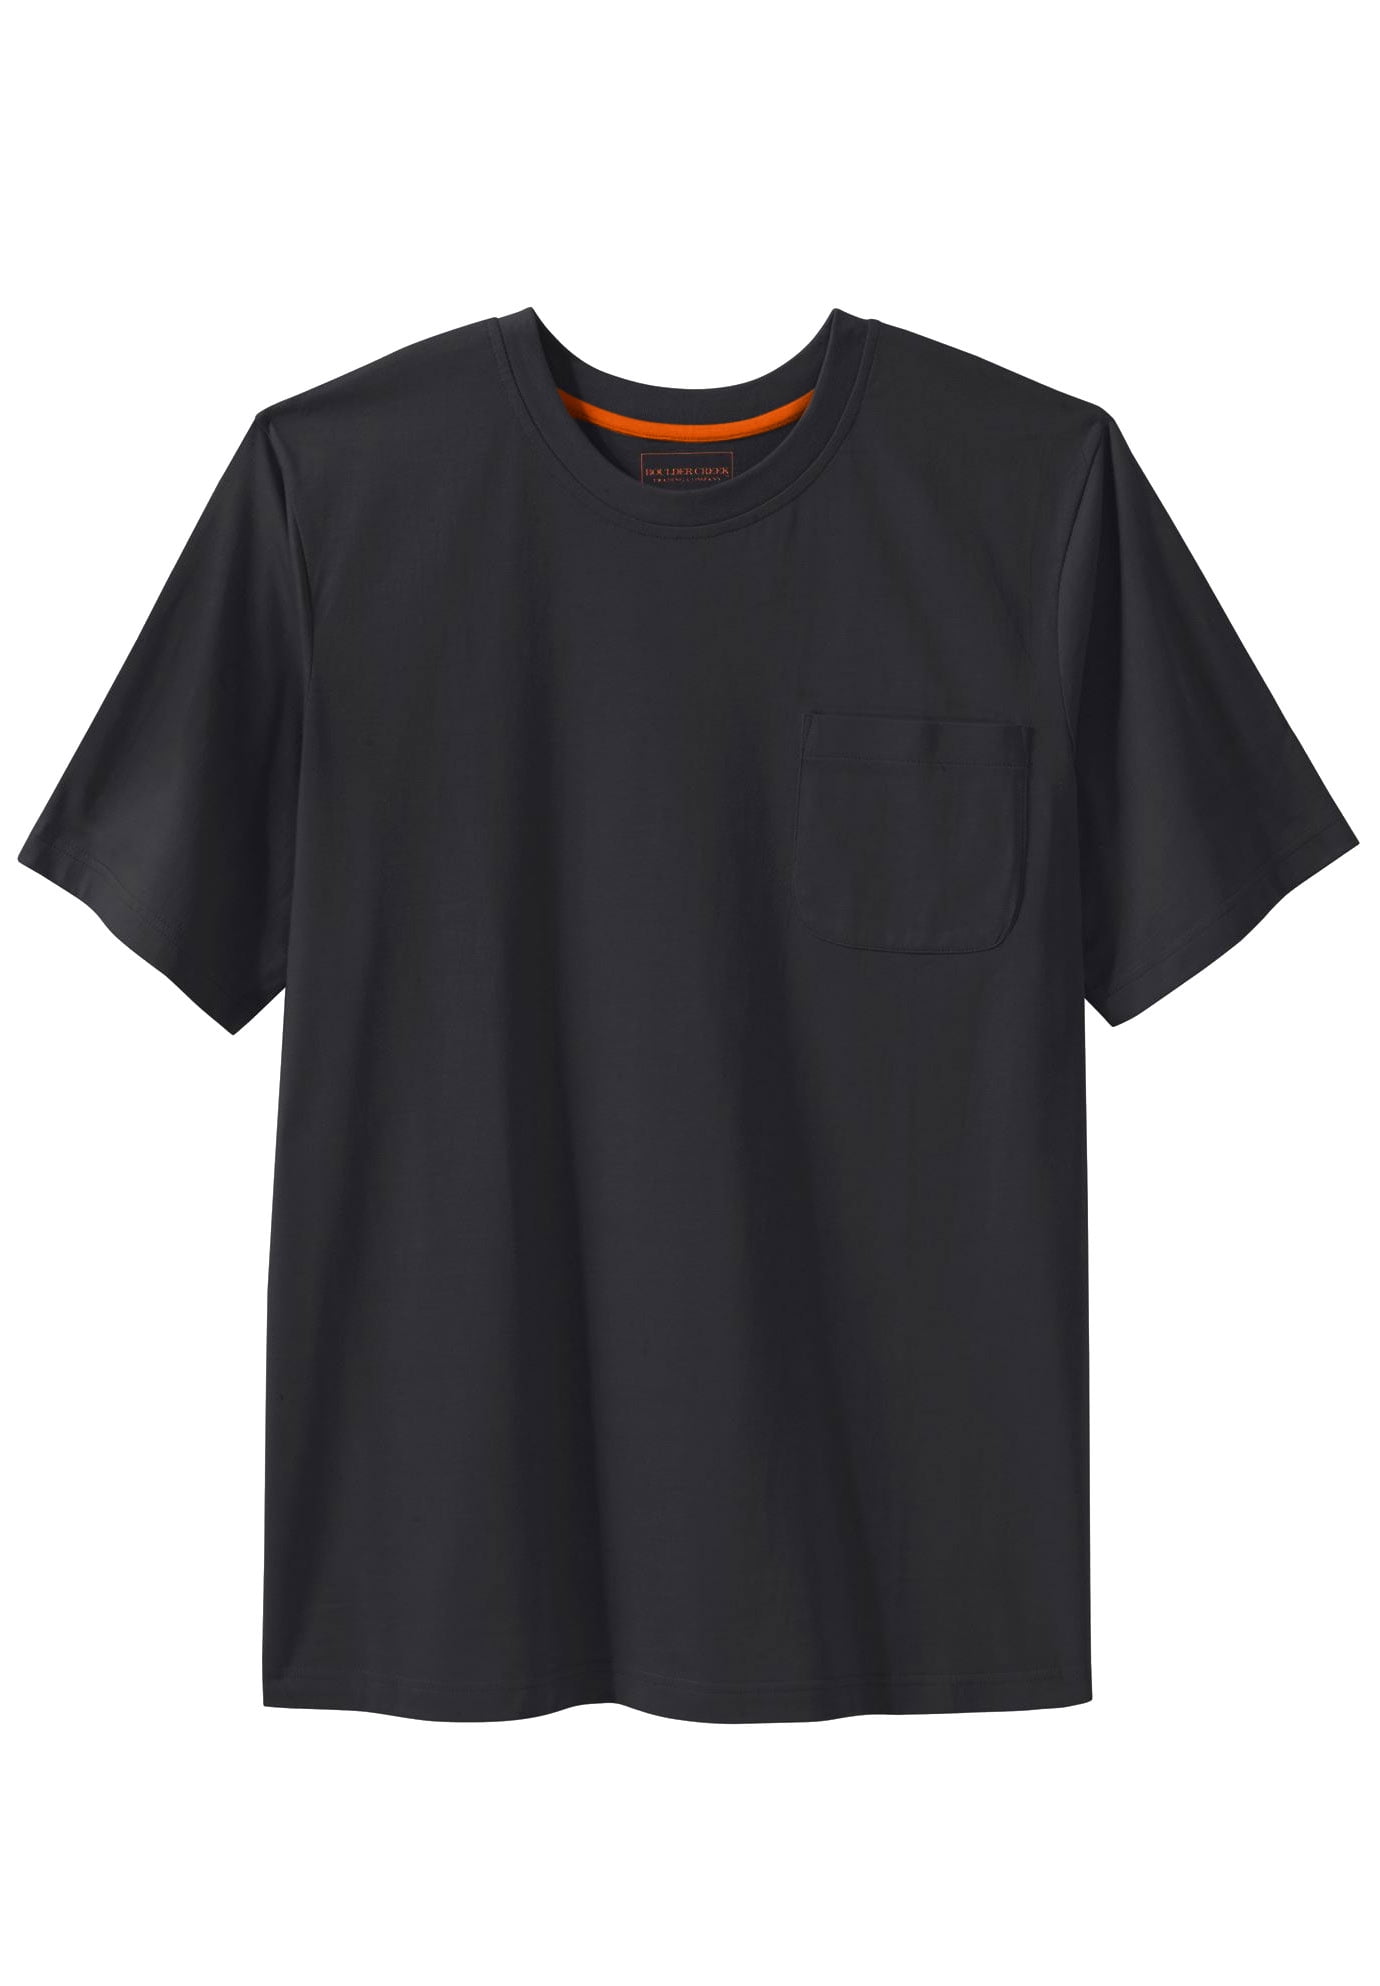 Boulder Creek by Kingsize Men's Big & Tall Heavyweight Crewneck Long-Sleeve Pocket T-Shirt 